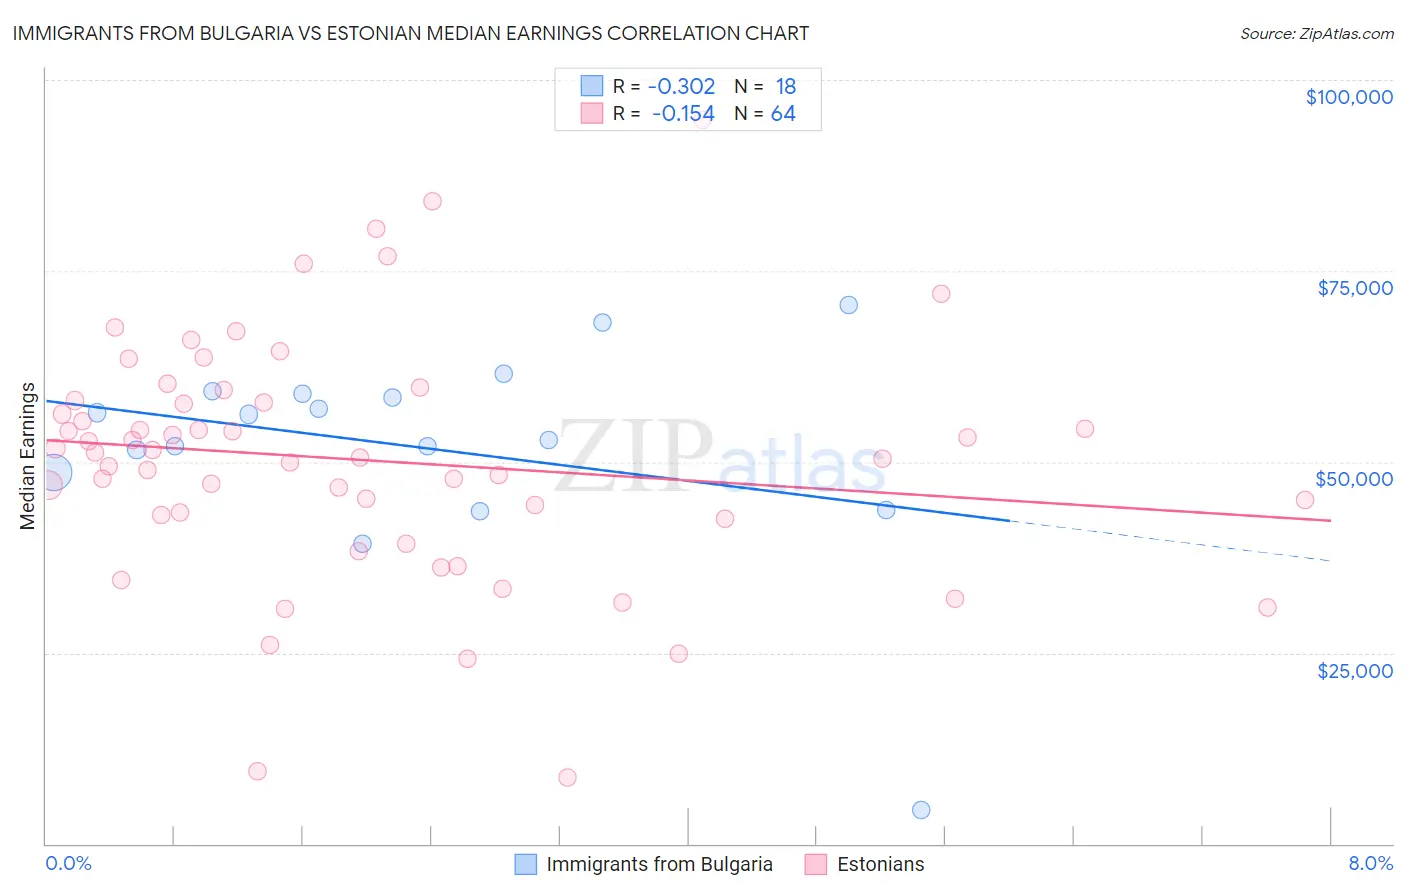 Immigrants from Bulgaria vs Estonian Median Earnings